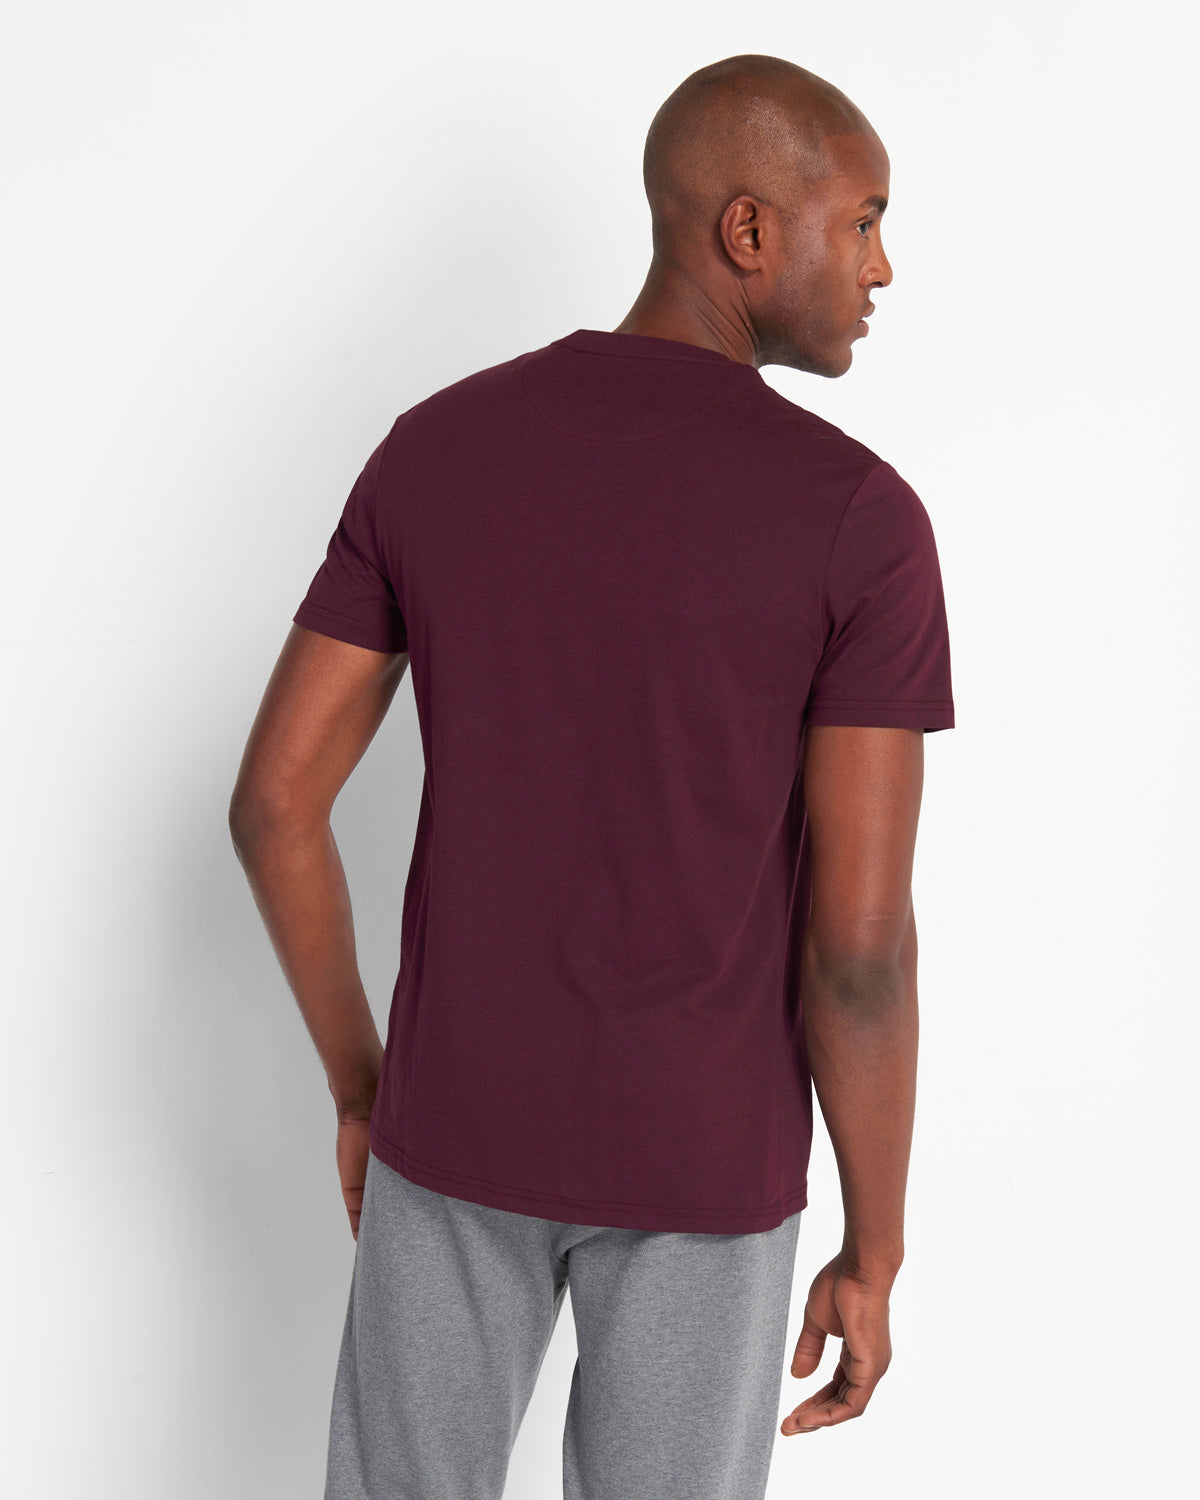 Lyle & Scott Plain Burgundy T-Shirt